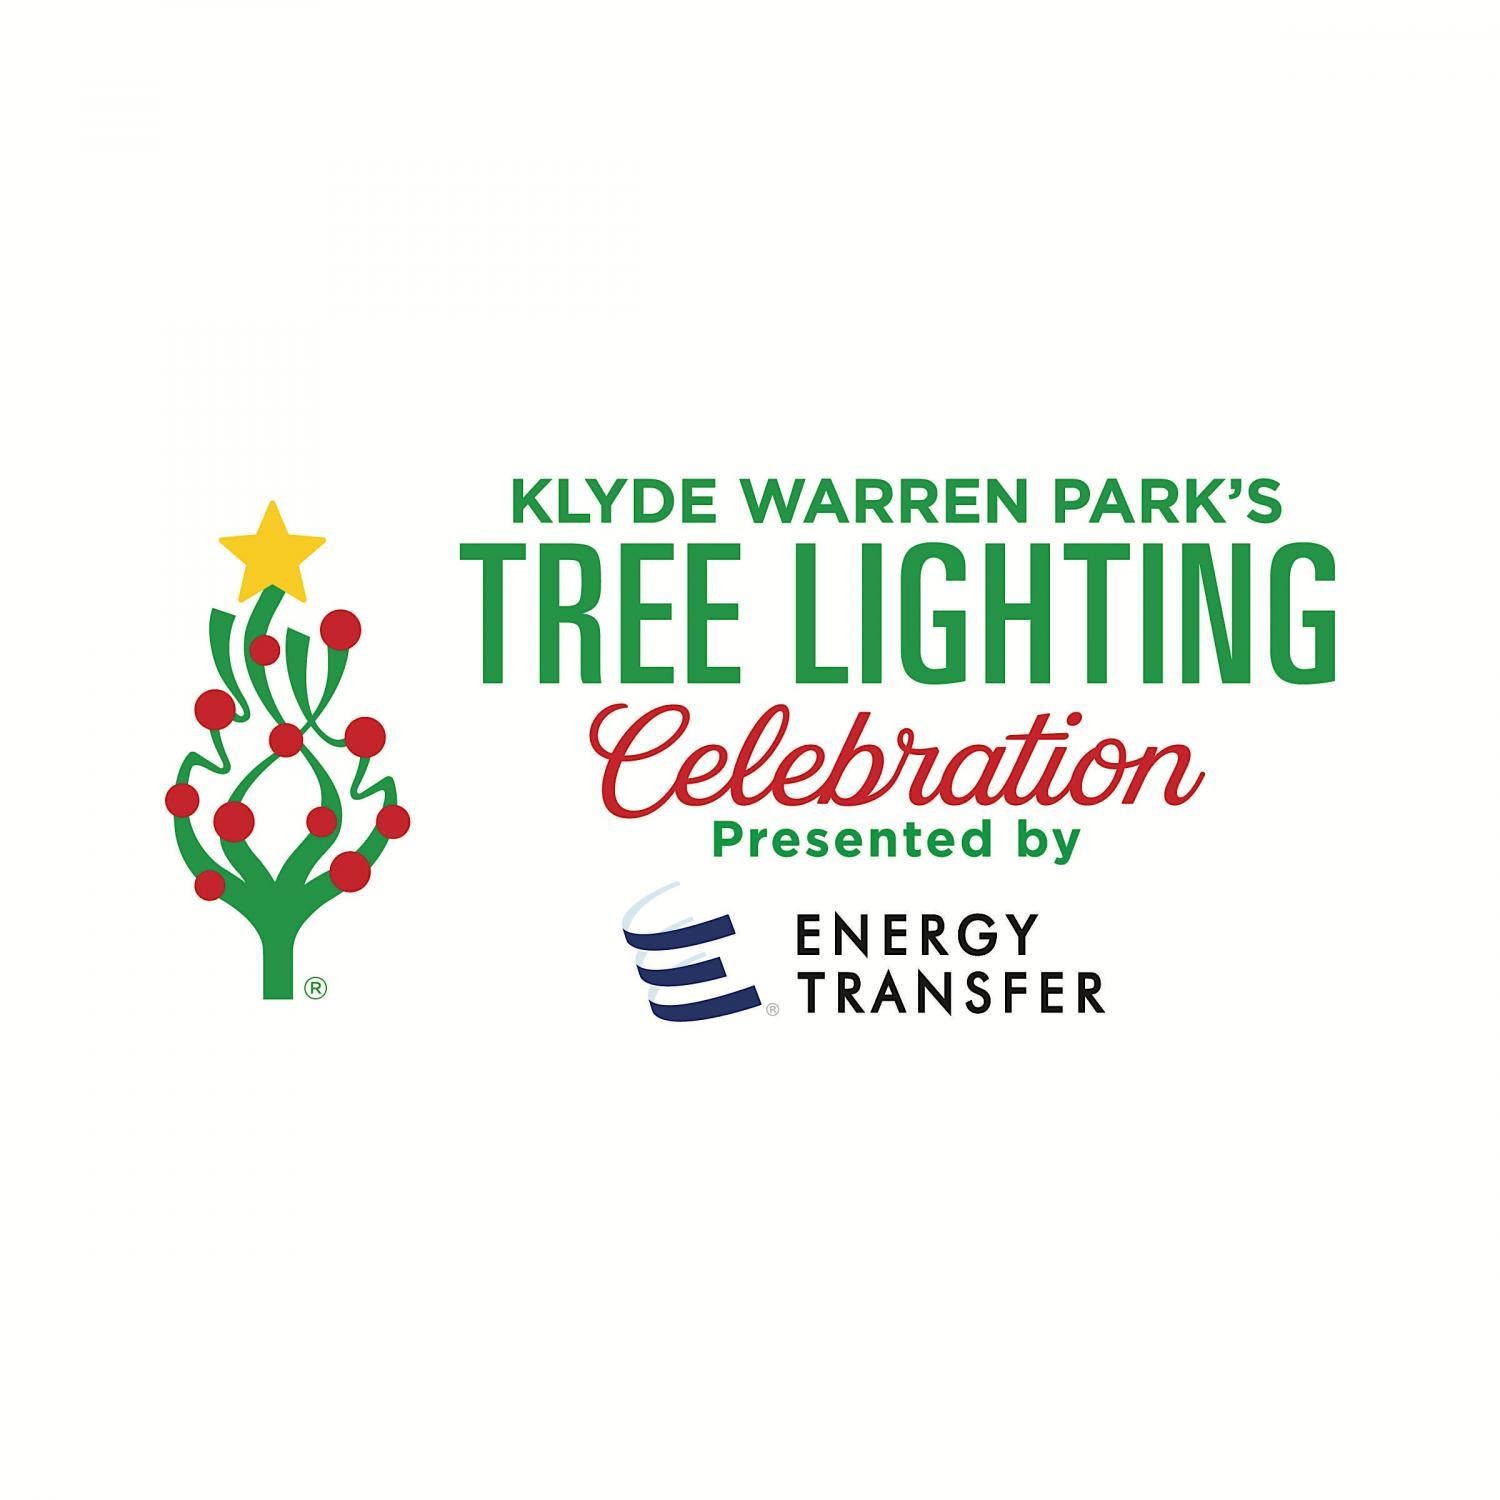 Klyde Warren Park's Tree Lighting Celebration presented by Energy Transfer
Sat Dec 3, 3:00 PM - Sat Dec 3, 6:00 PM
in 43 days